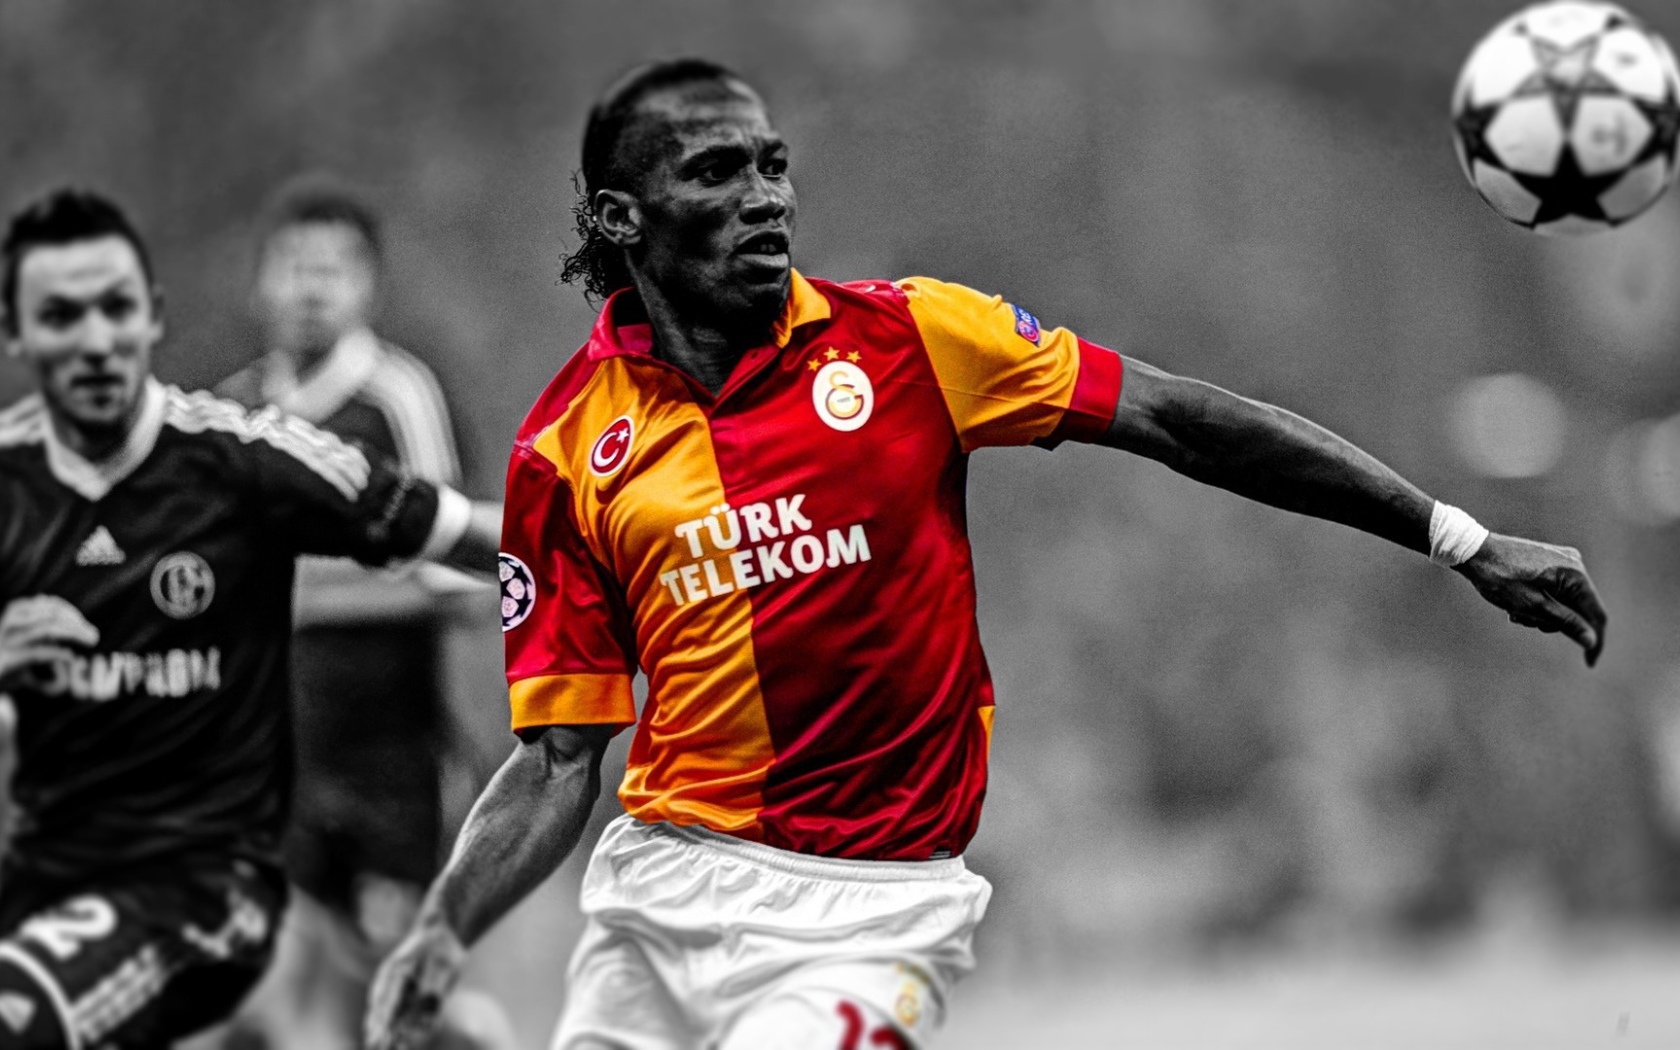 The forward of Galatasaray Didier Drogba